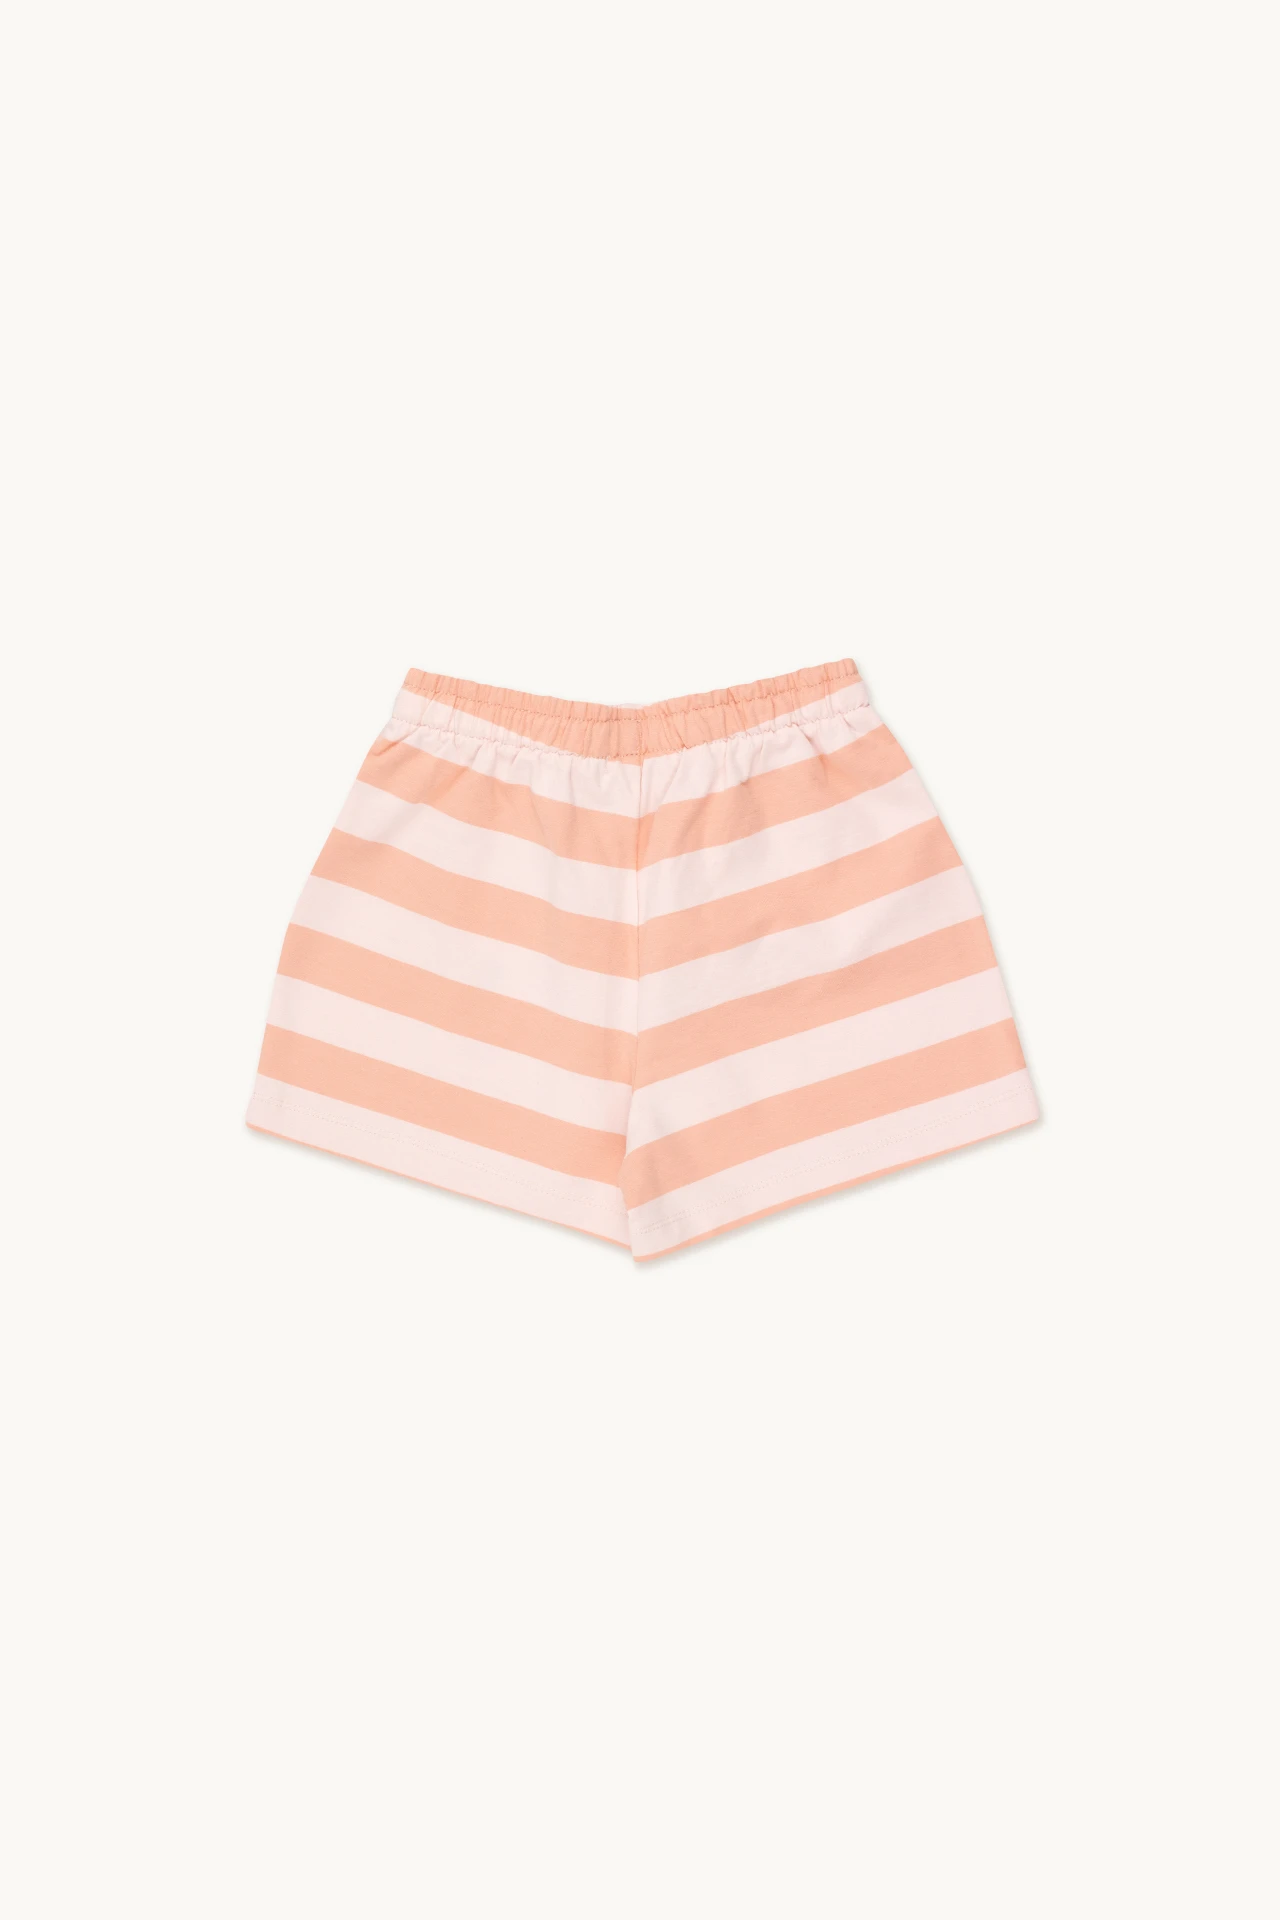 Szorty Stripes pastel pink/papaya 1